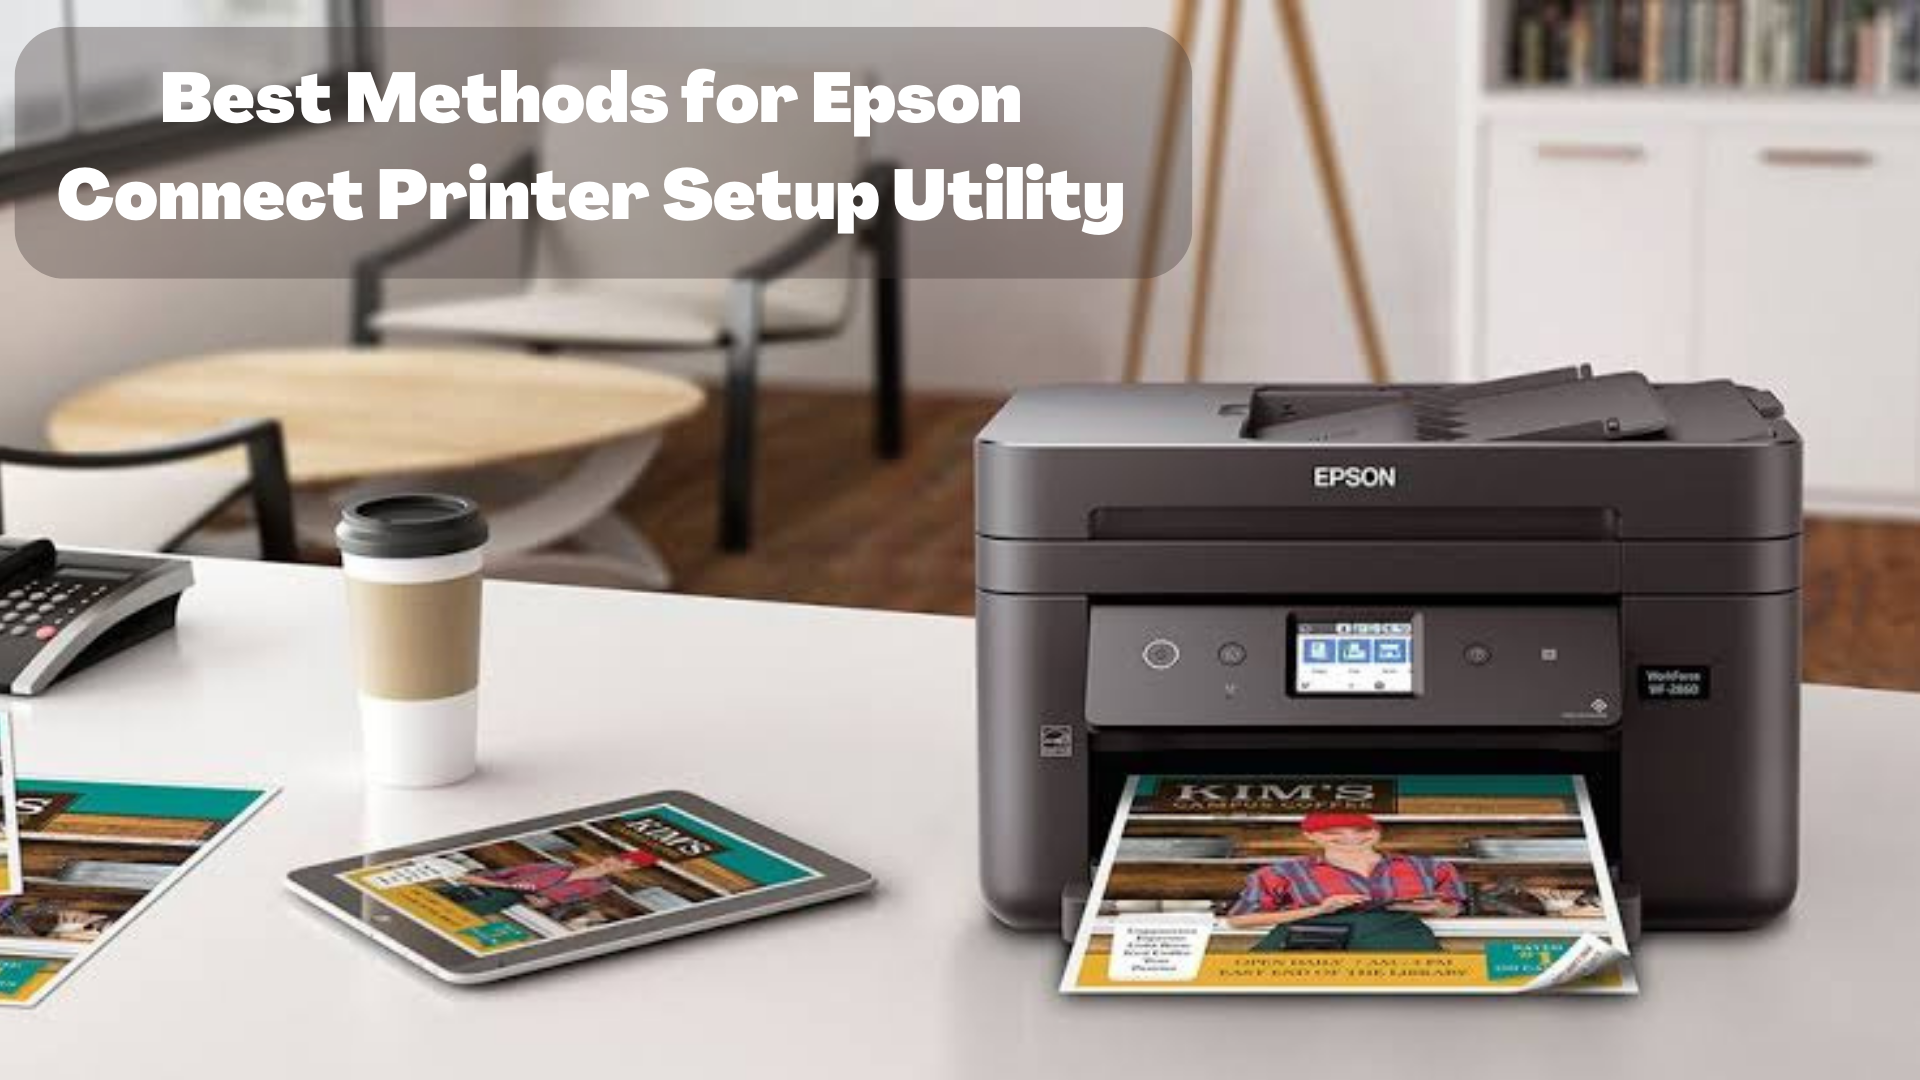 Best Methods for Epson Connect Printer Setup Utility